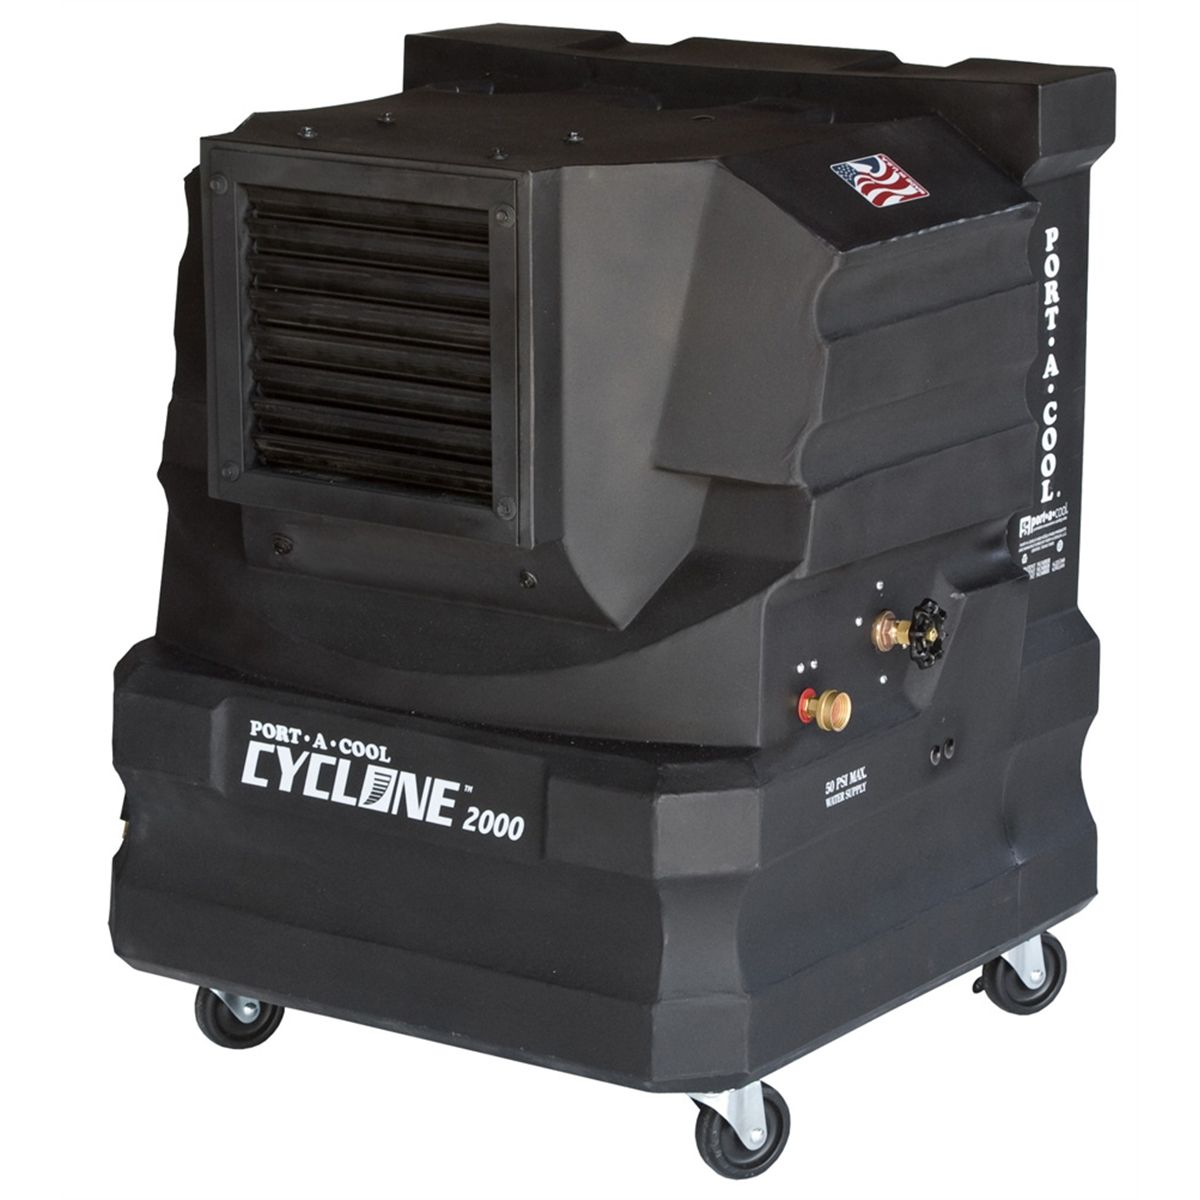 Cyclone 2000 Portable Evaporative Cooler